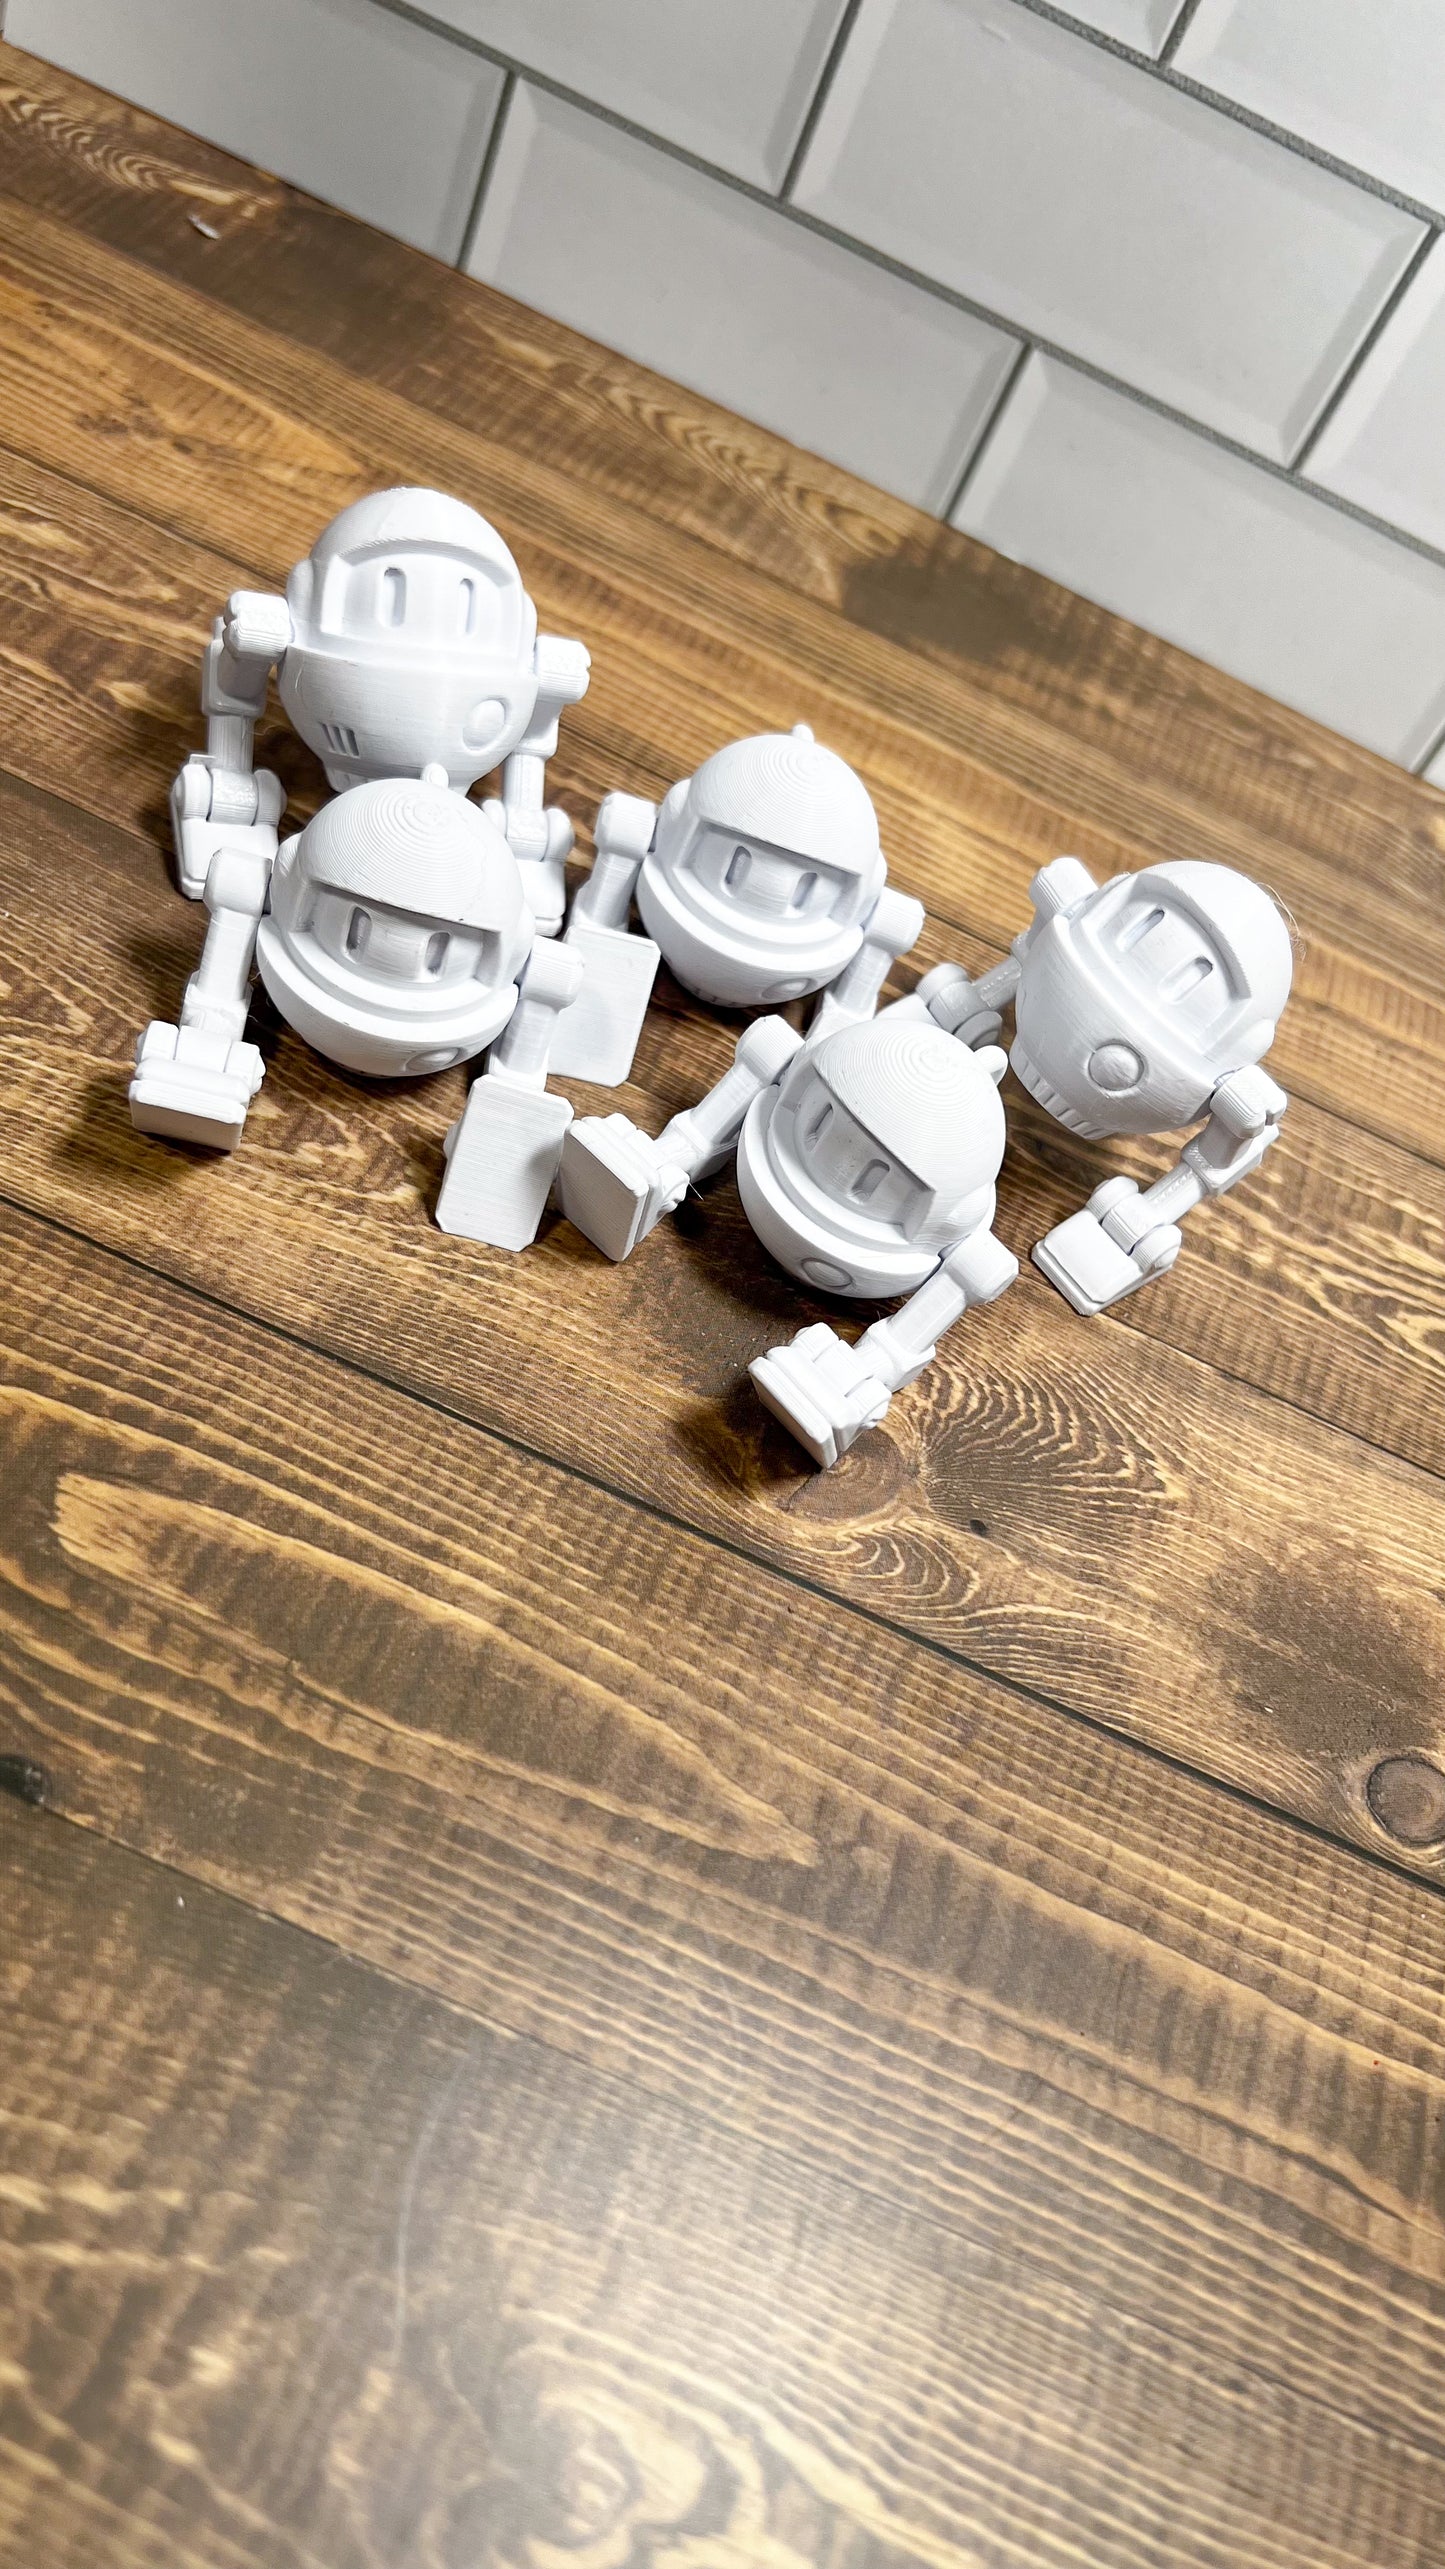 Robot, Articulated Robot, Fidget Bot, 3D Printed, Desk Item, Custom Product, Decor, Adult Gift